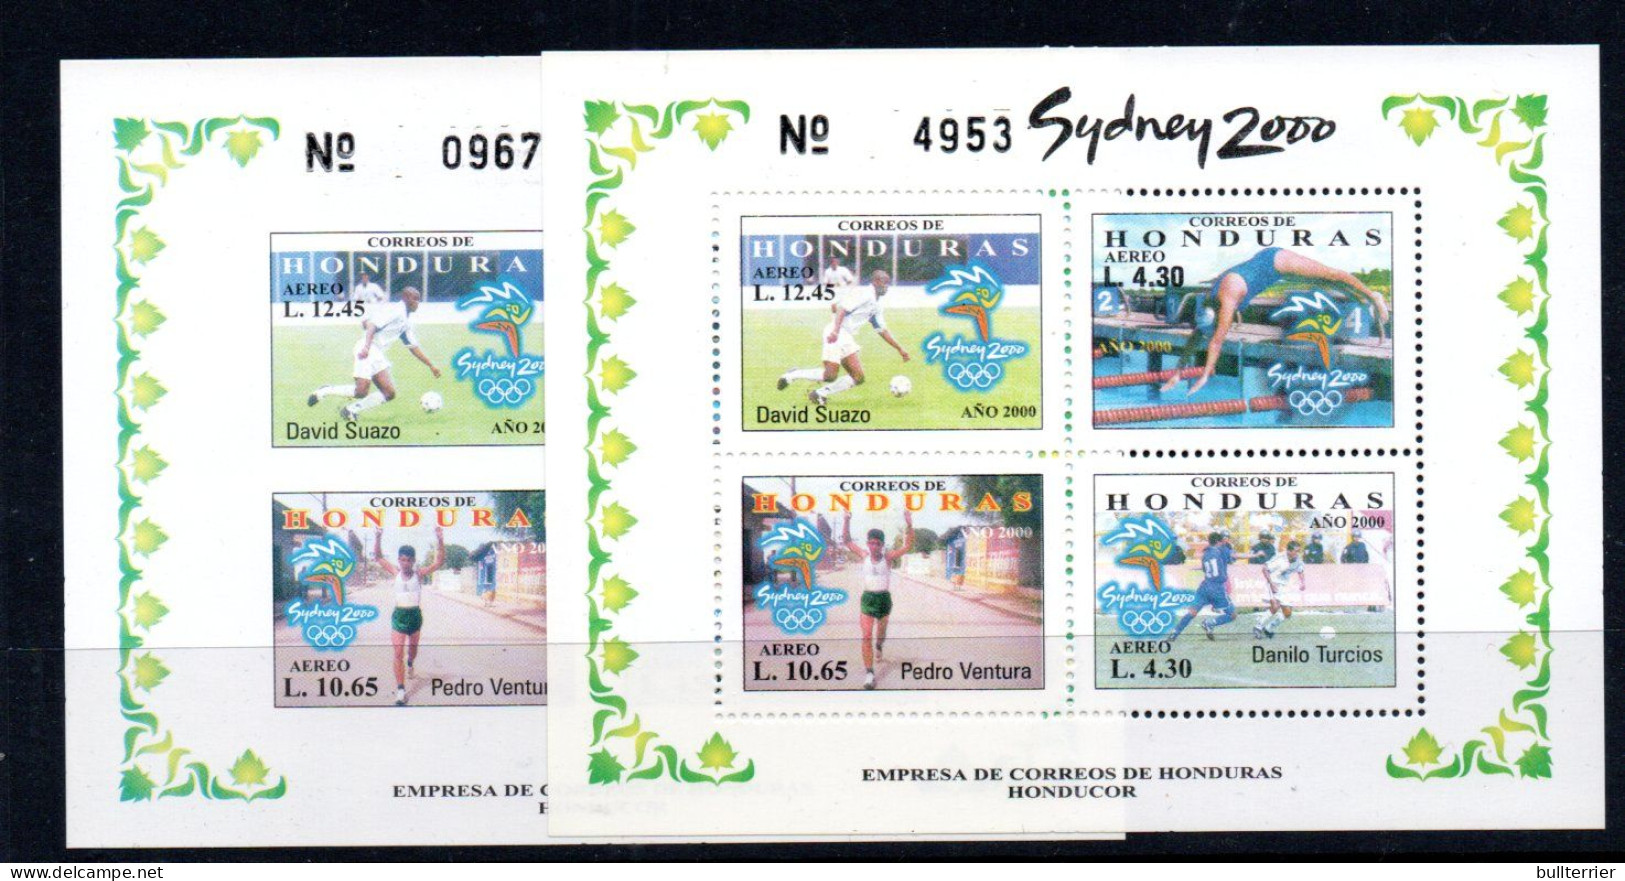 OLYMPICS - Honduras - 2000 - Sydney Olympics S/sheets Perf & Imperf MNH, - Verano 2000: Sydney